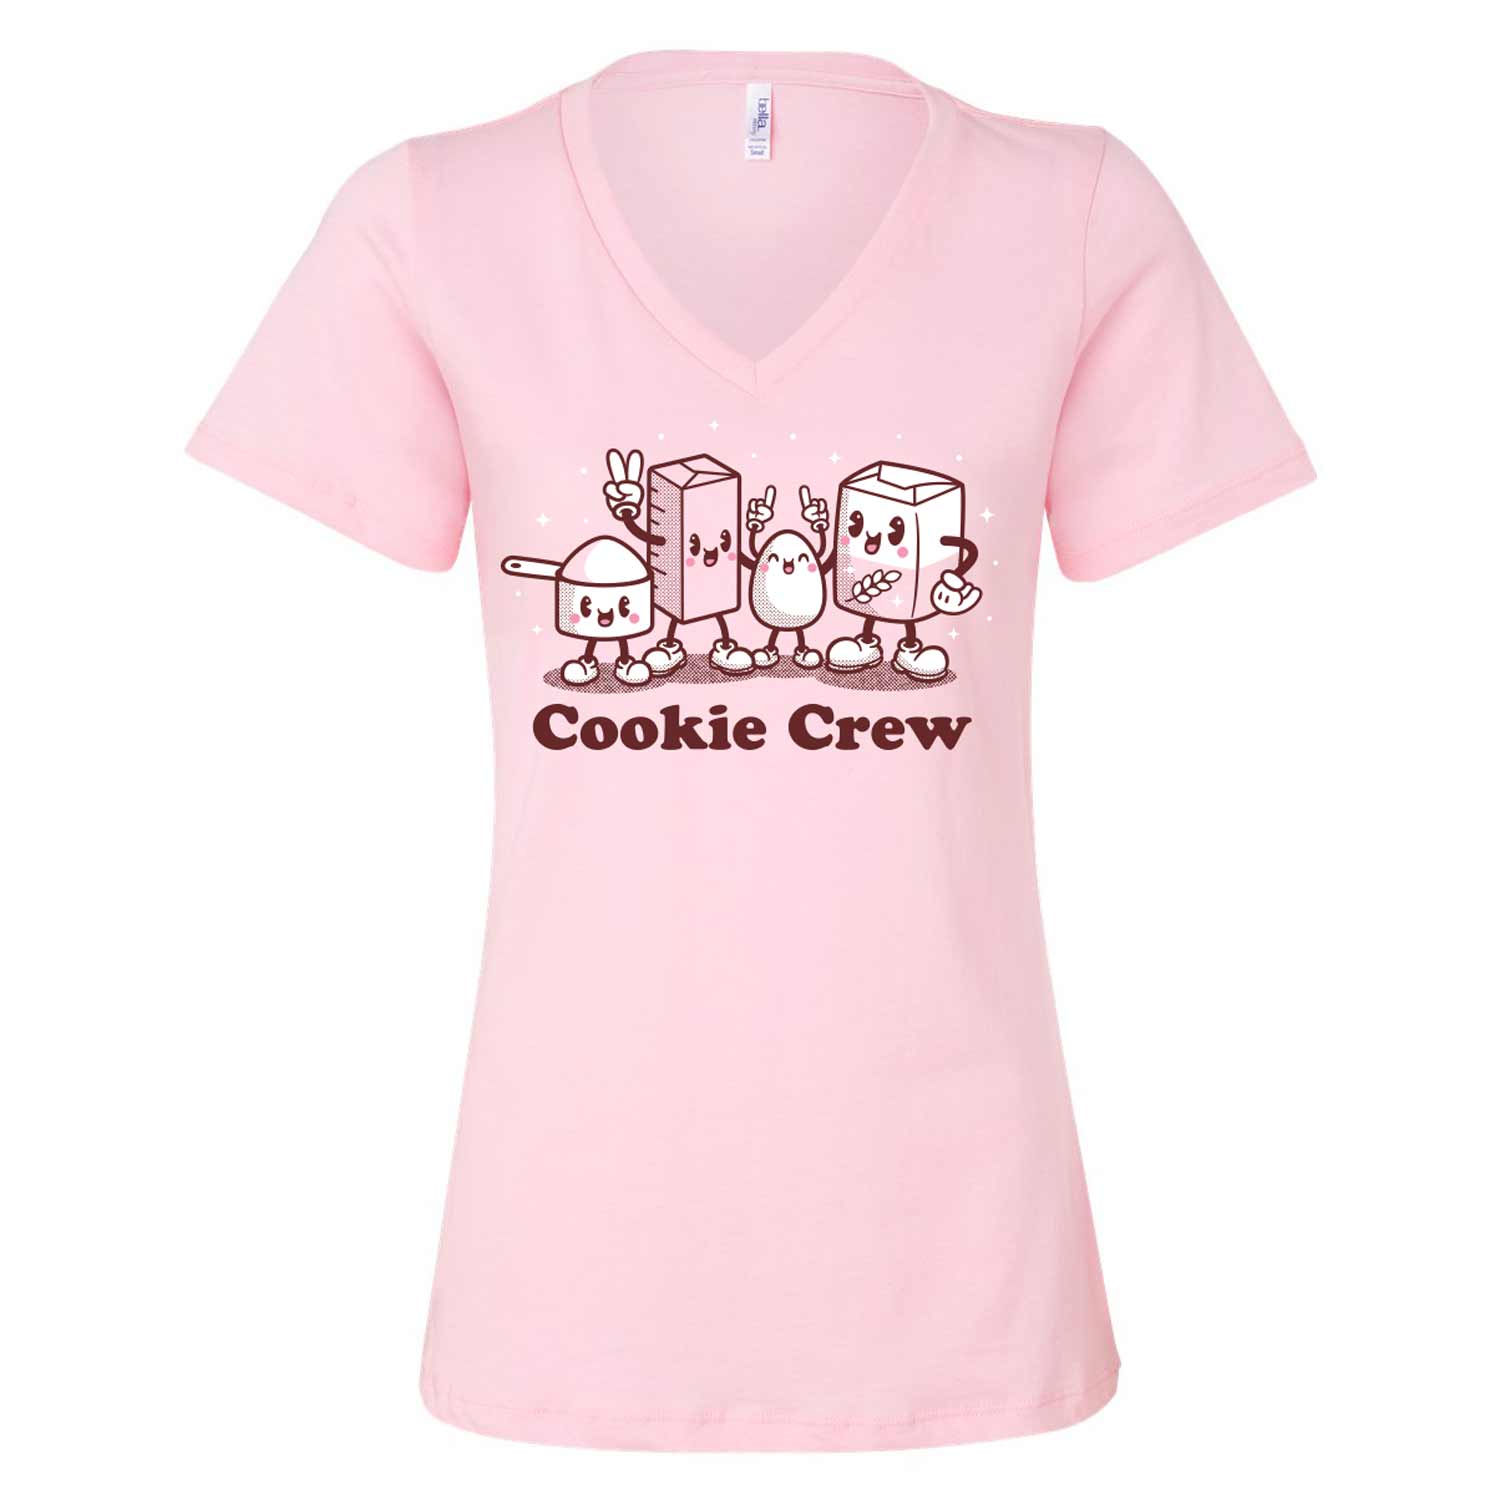 Cookie Crew Ladies V-Neck T-Shirt